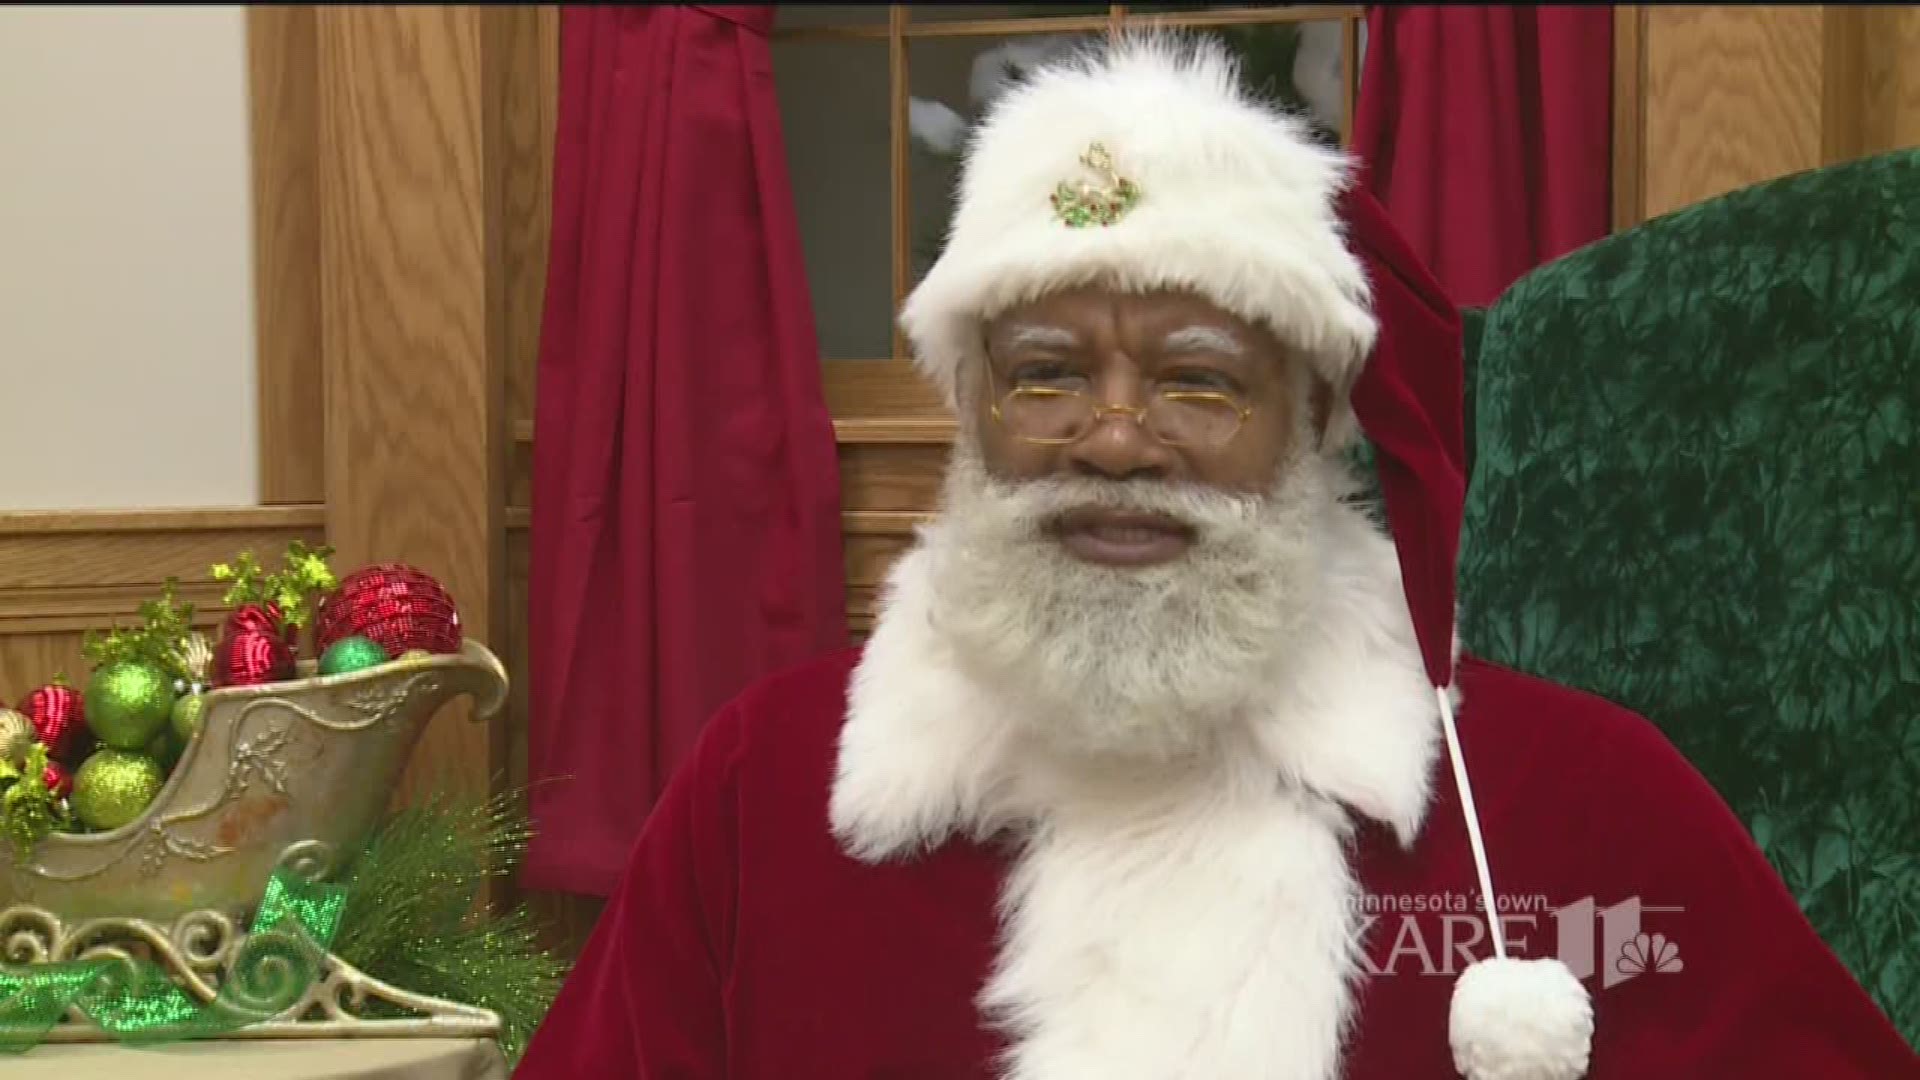 Mall of America welcomes 1st black Santa